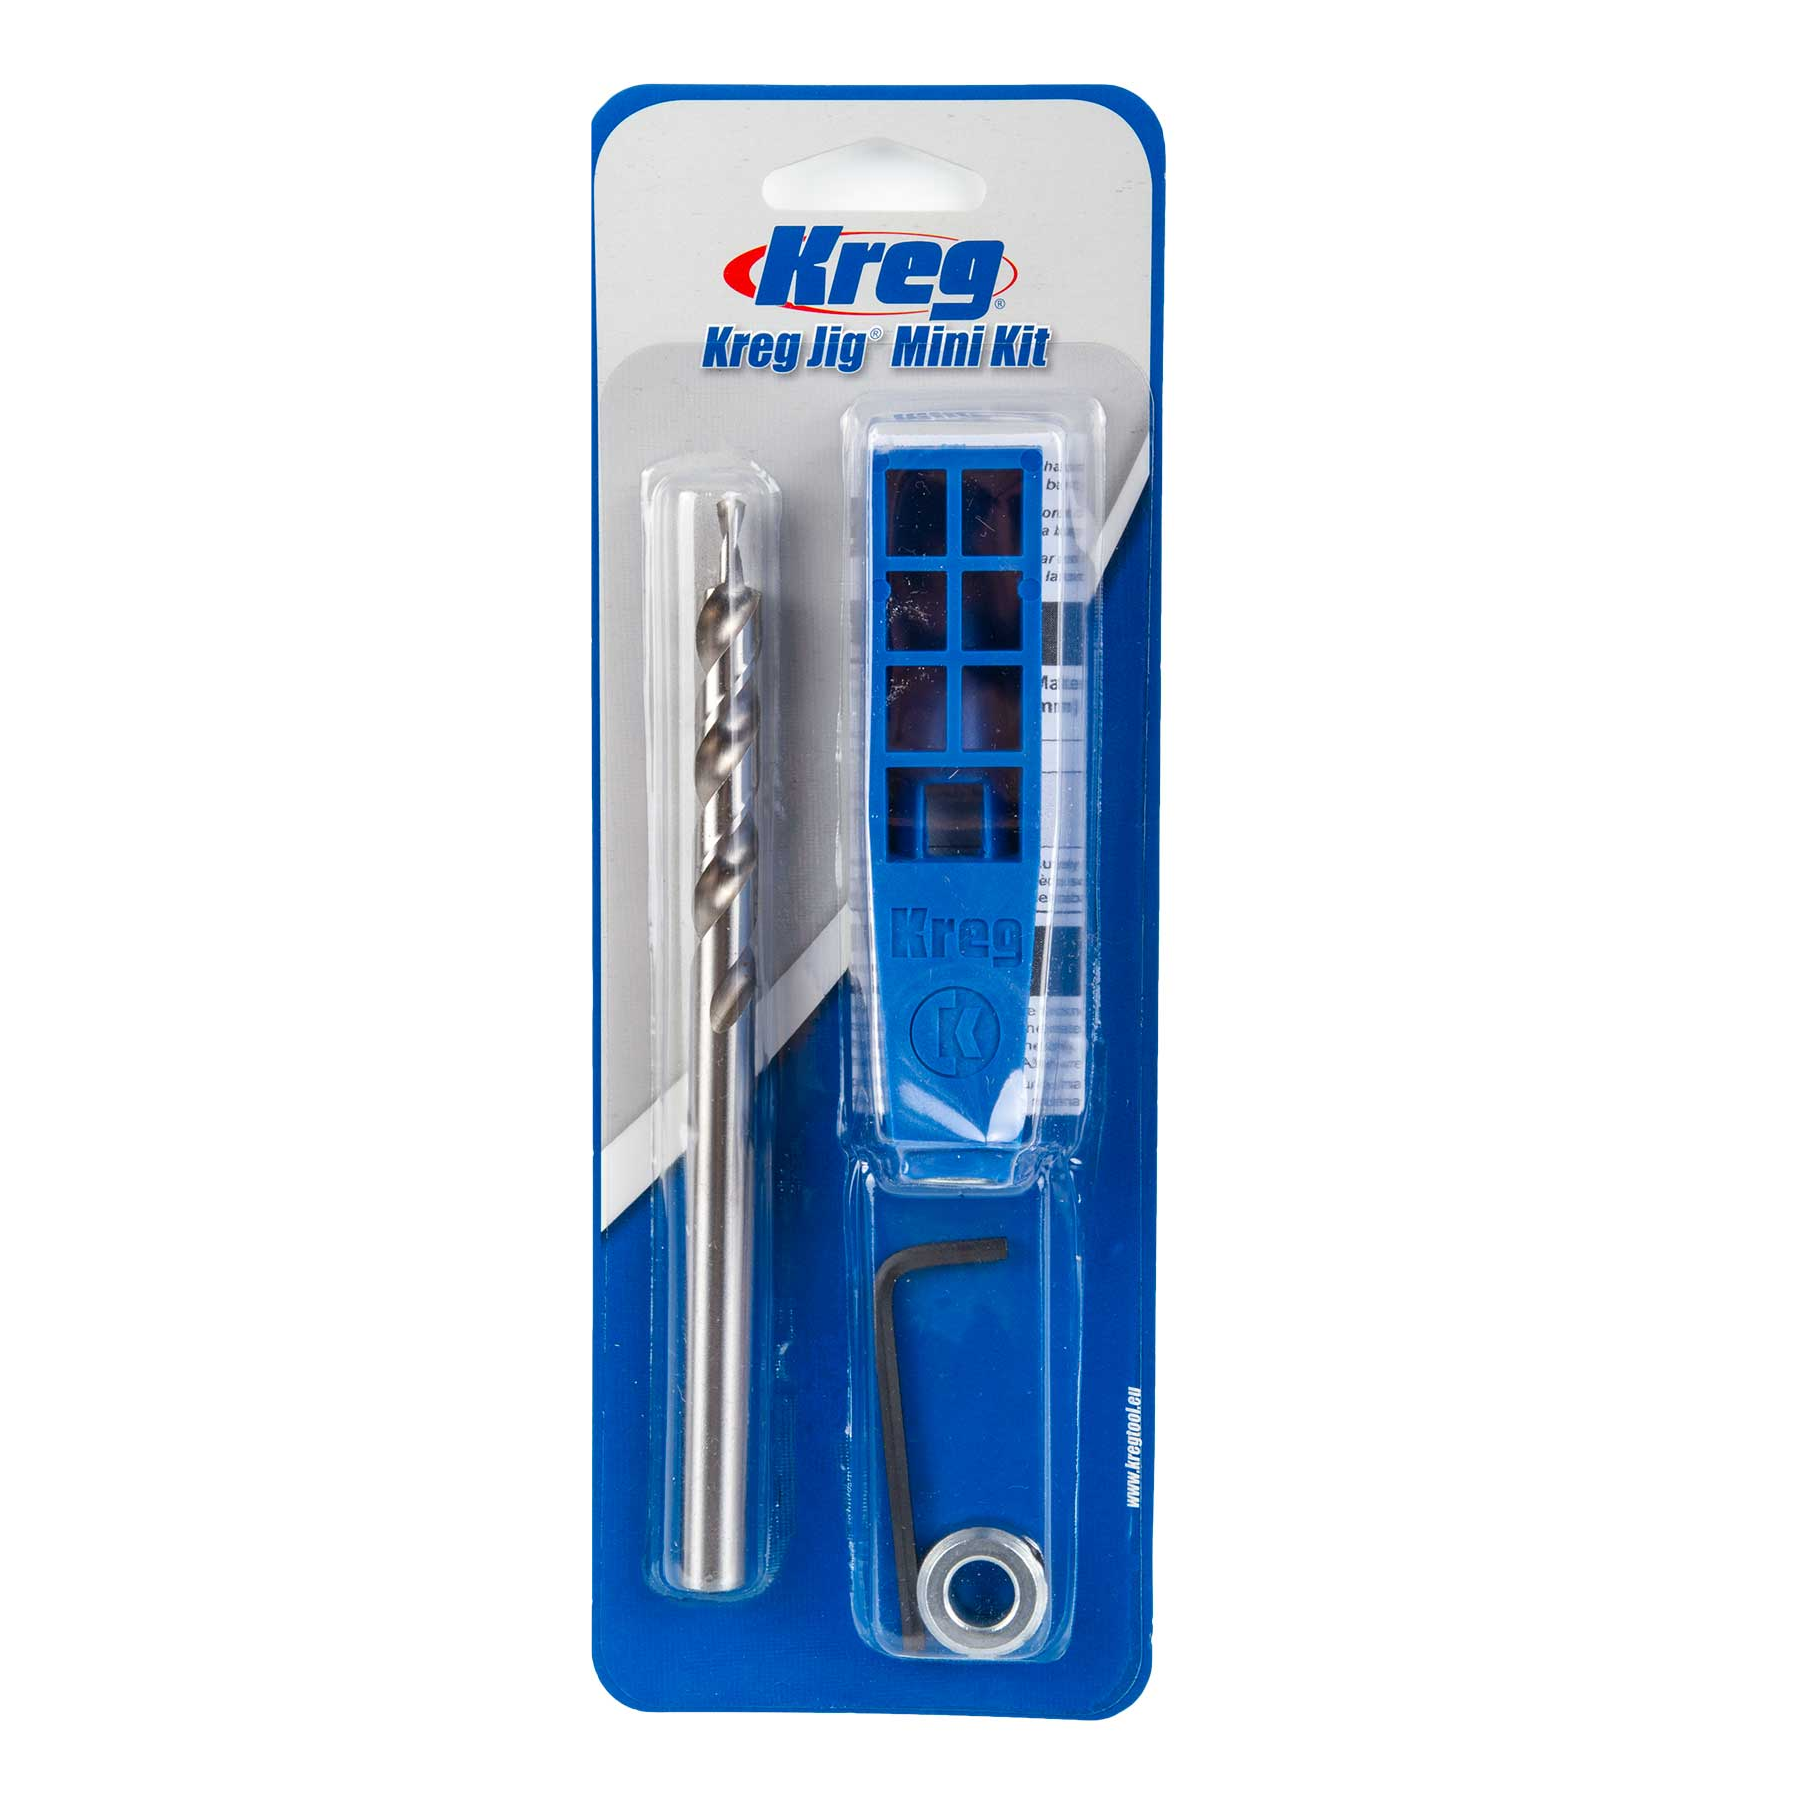 Kreg Jig® Micro Kit